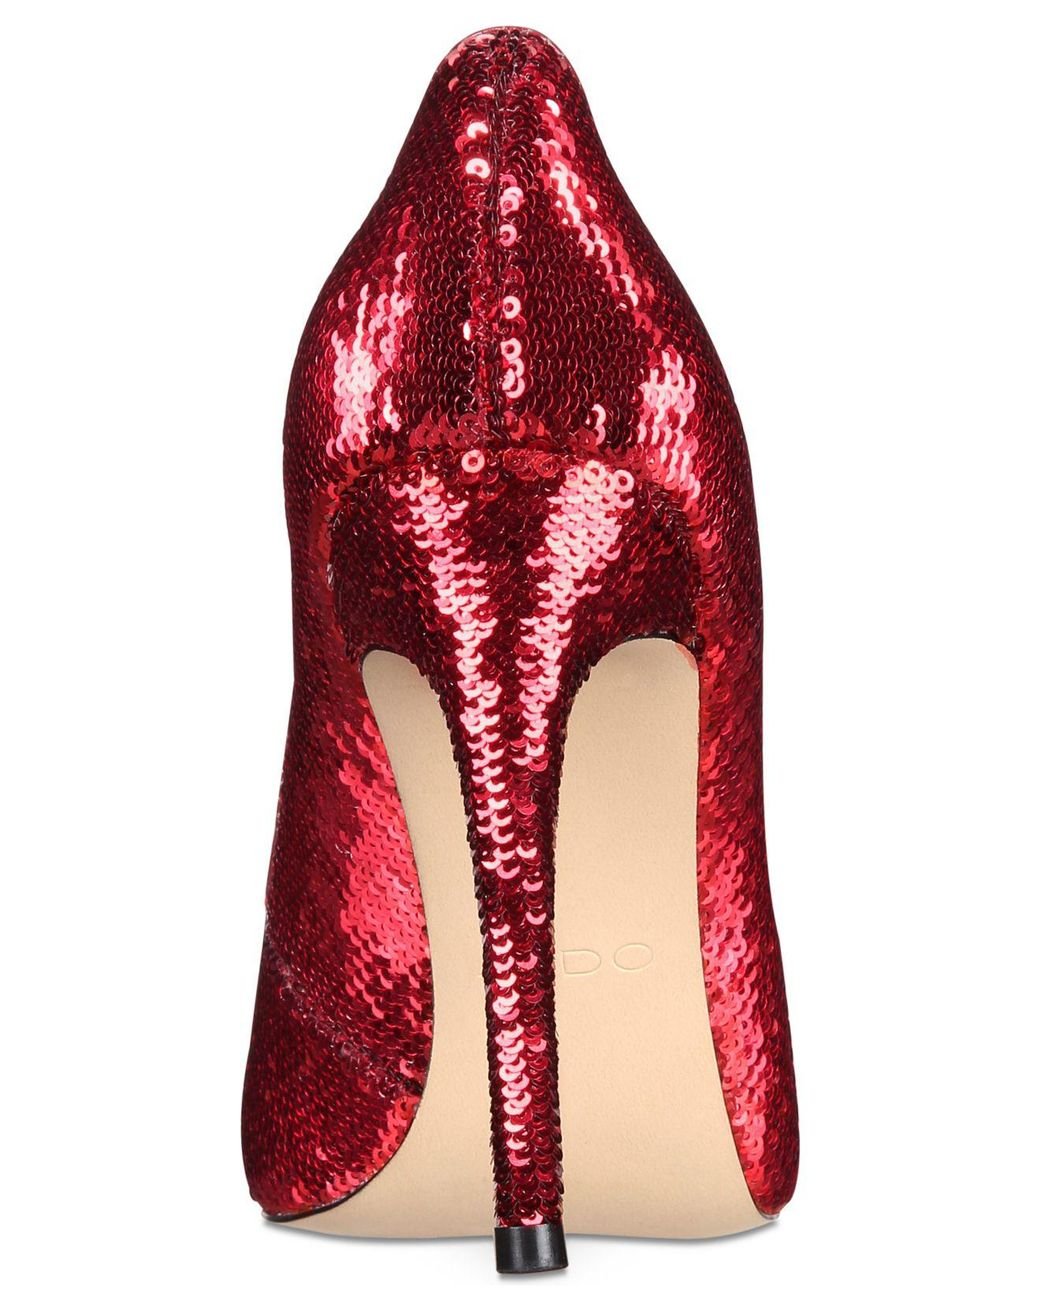 Aldo | Shoes | Aldo Heels 85 Stessy Sequin Stiletto Pumps Red Pointed |  Poshmark